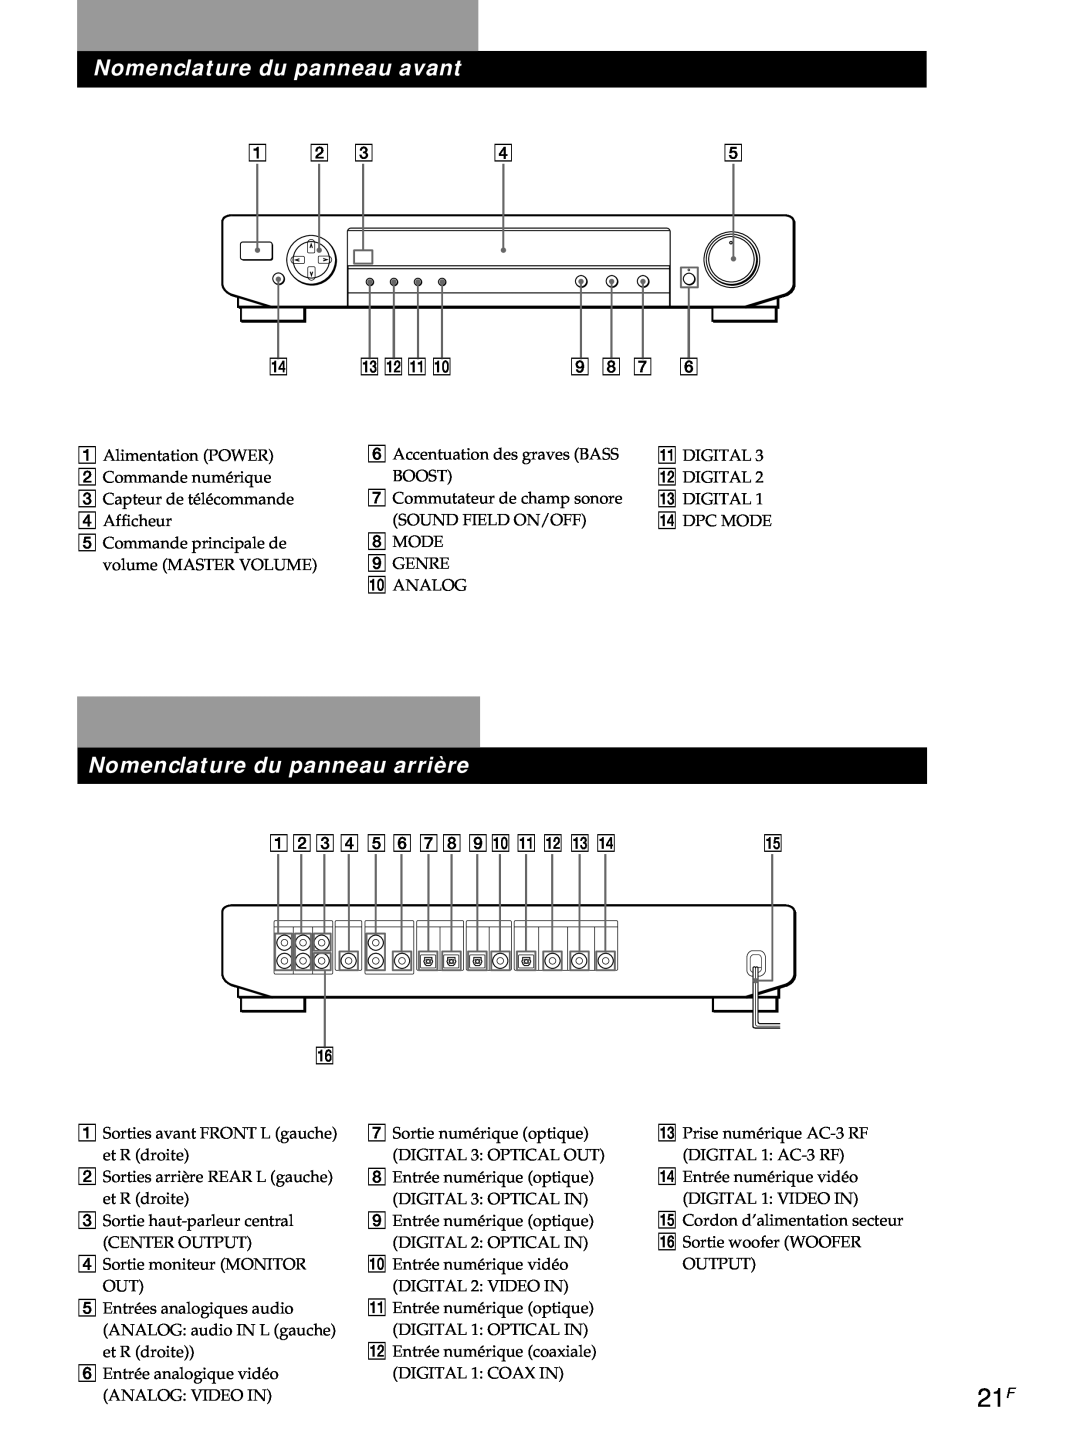 Sony SDP-E800 operating instructions Nomenclature du panneau avant, Nomenclature du panneau arrière 